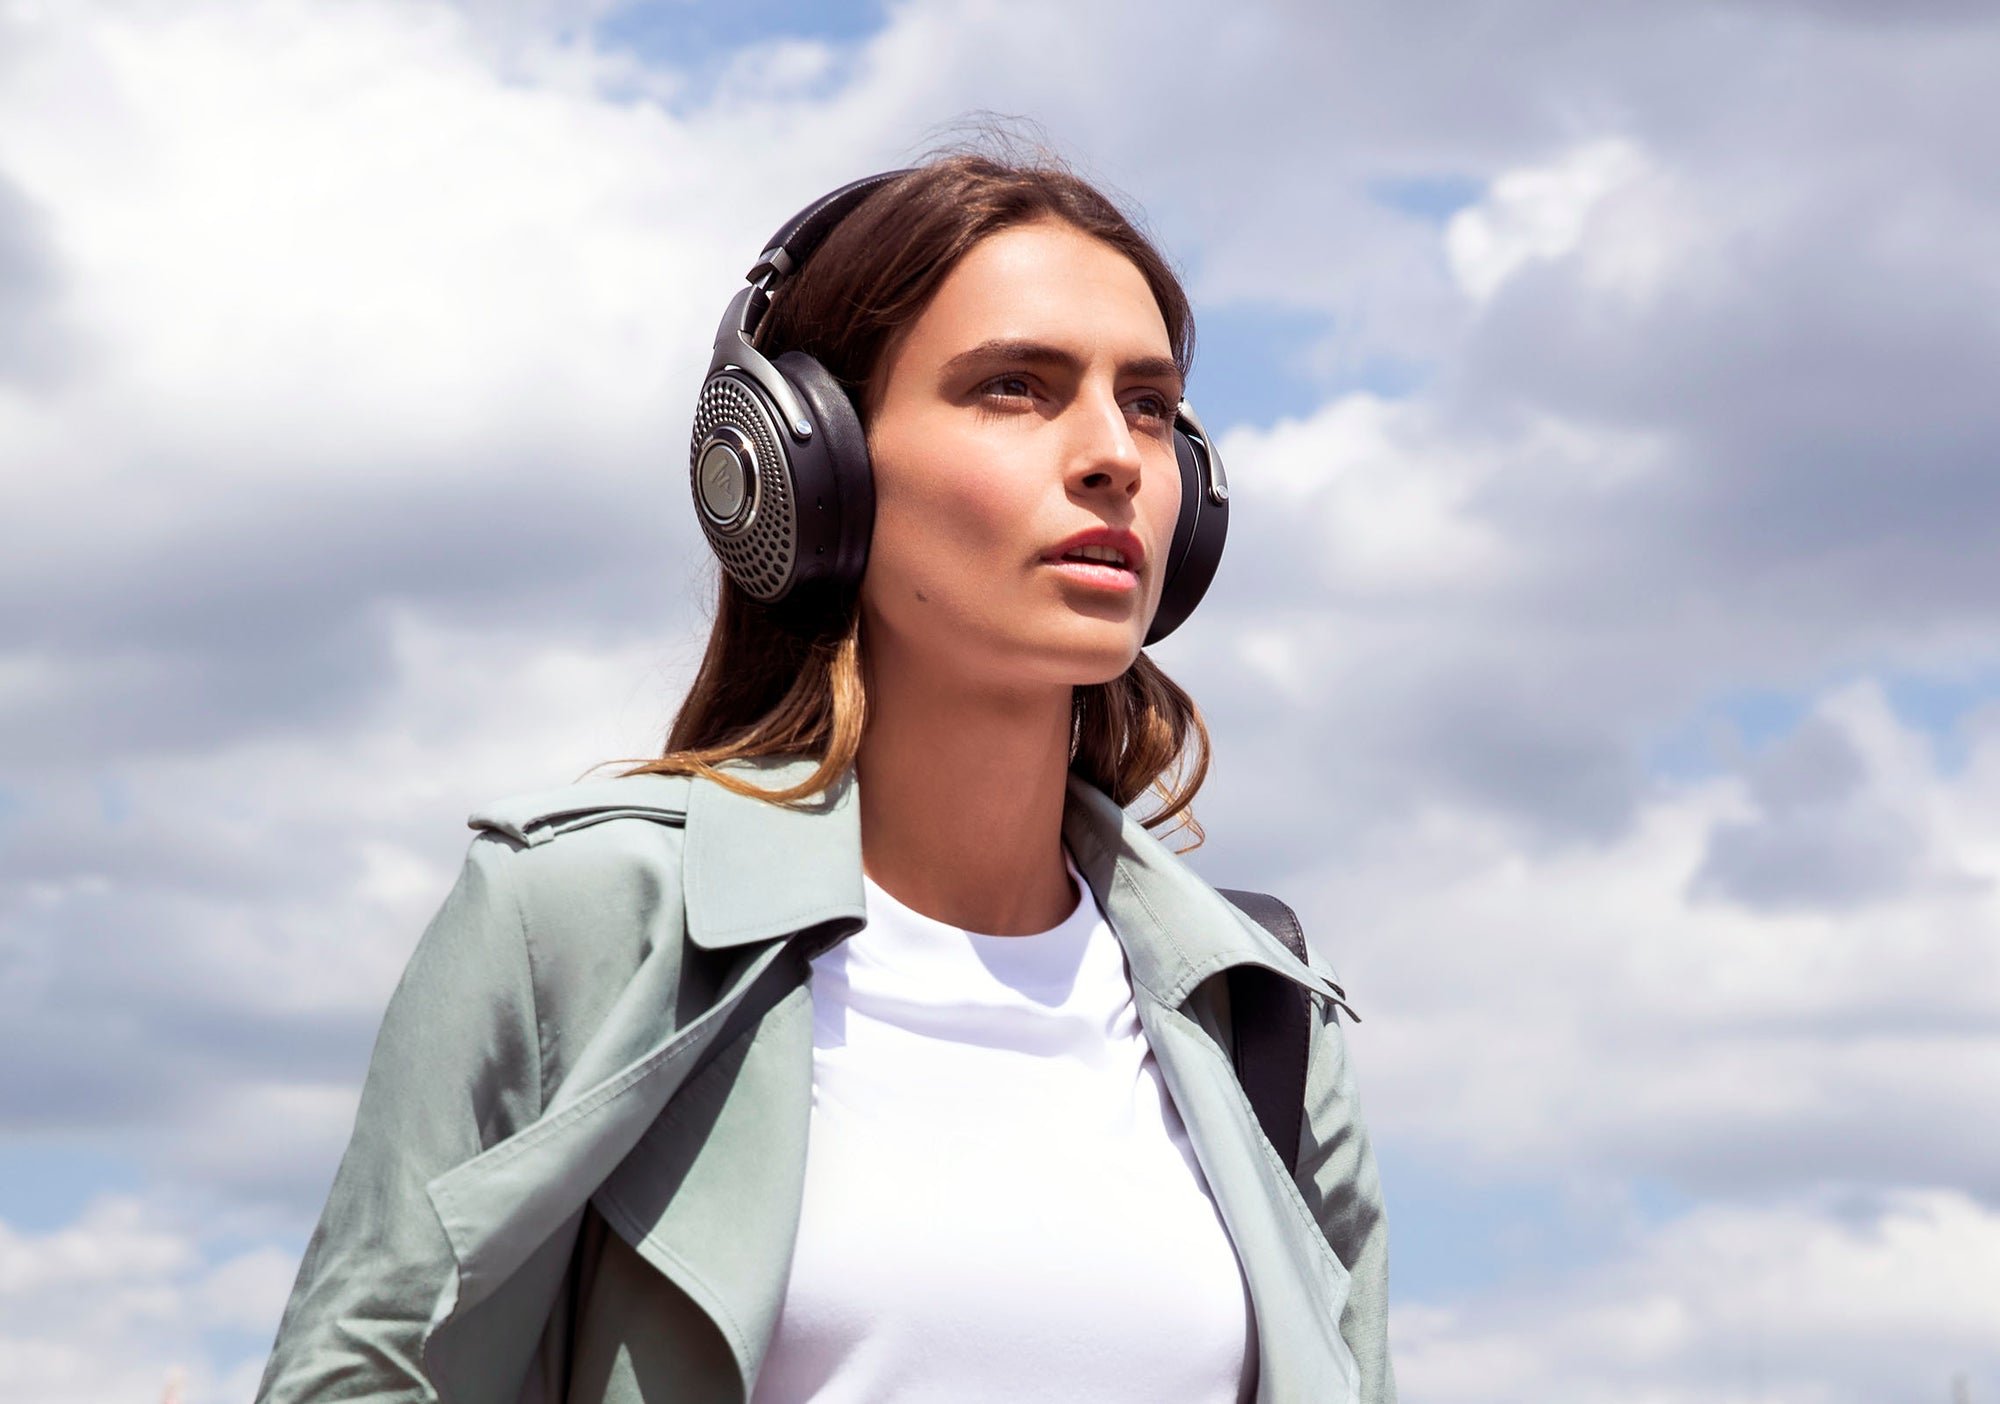 Focal Bathys Over-Ear Hi-Fi Bluetooth Wireless Headphones with Active – Red  Ape Headphone Store